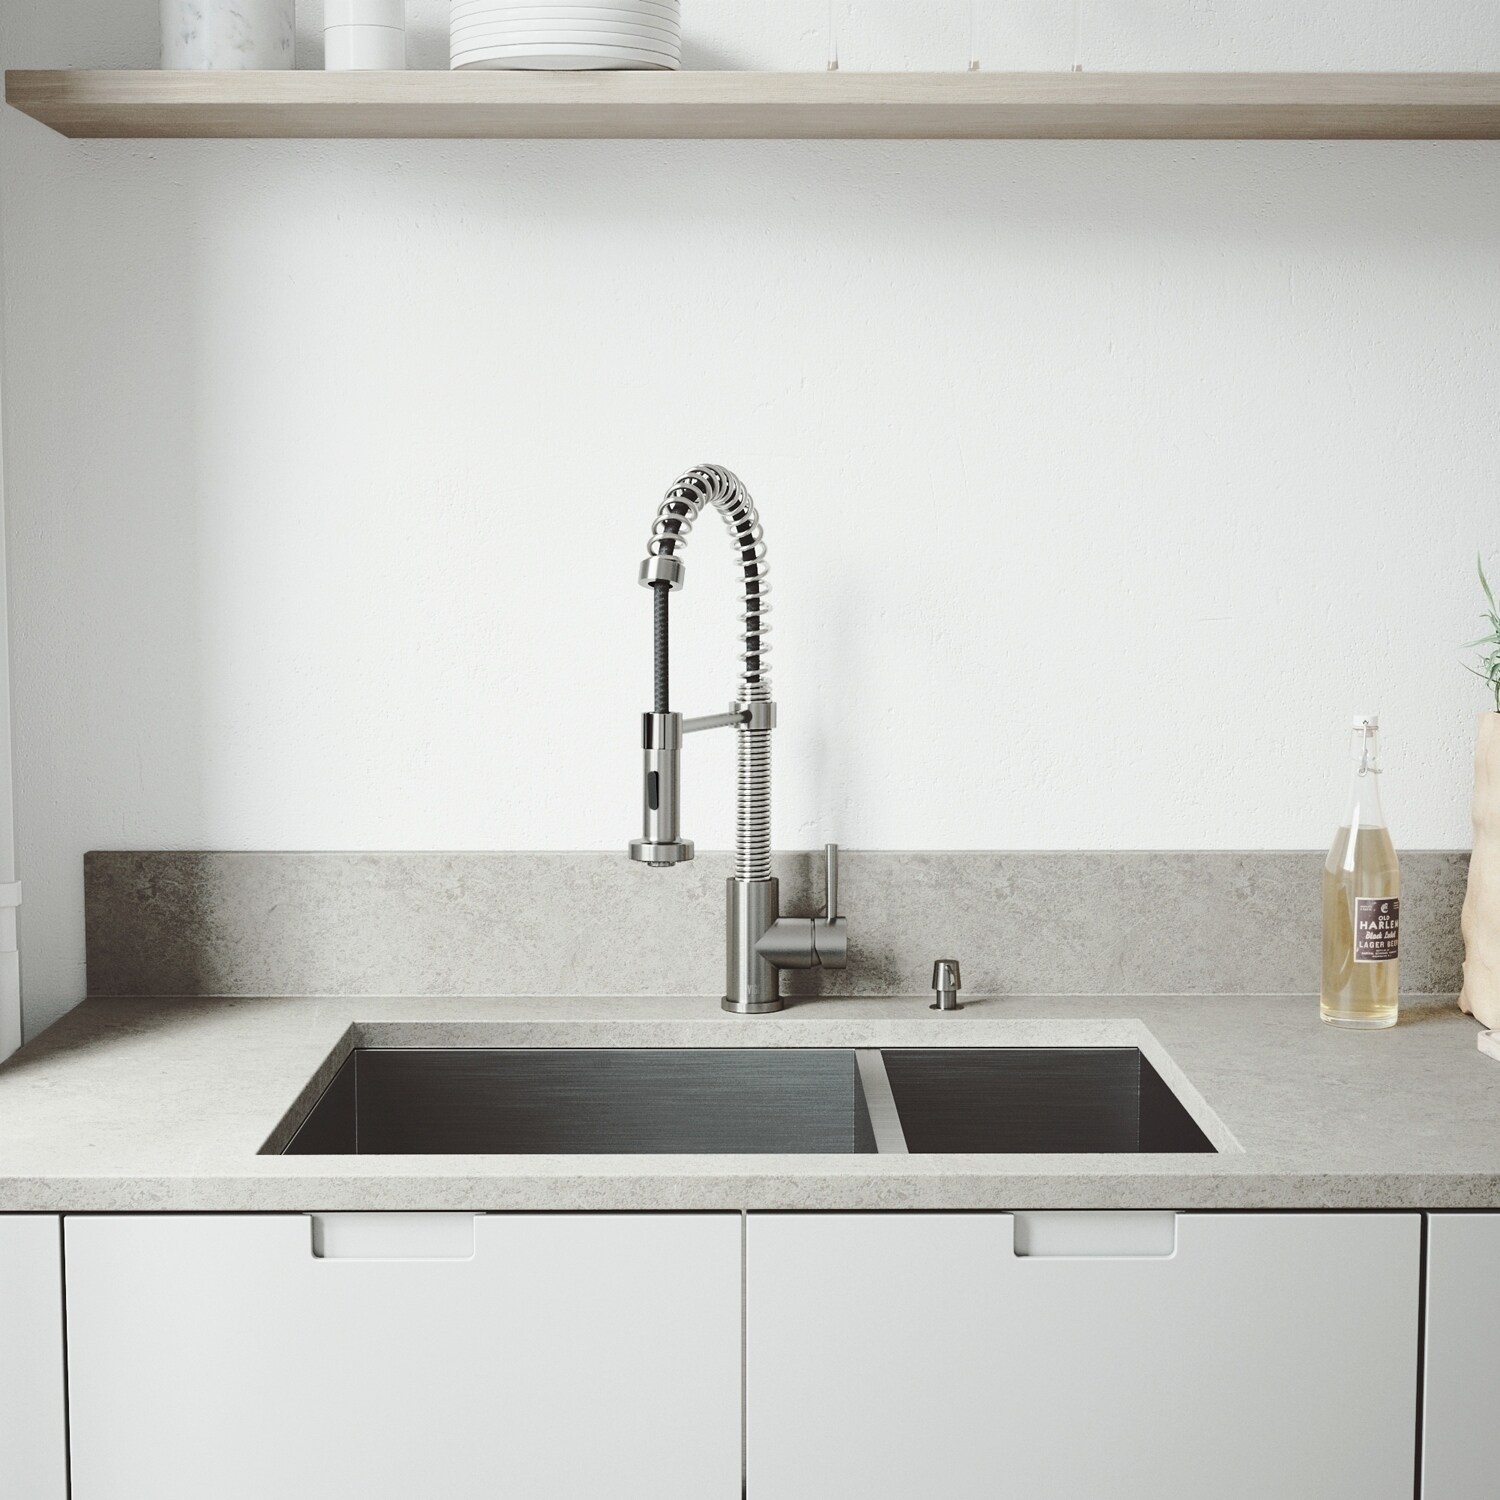 Vigo Endicott Stainless Steel Kitchen Sink And Edison Faucet Set